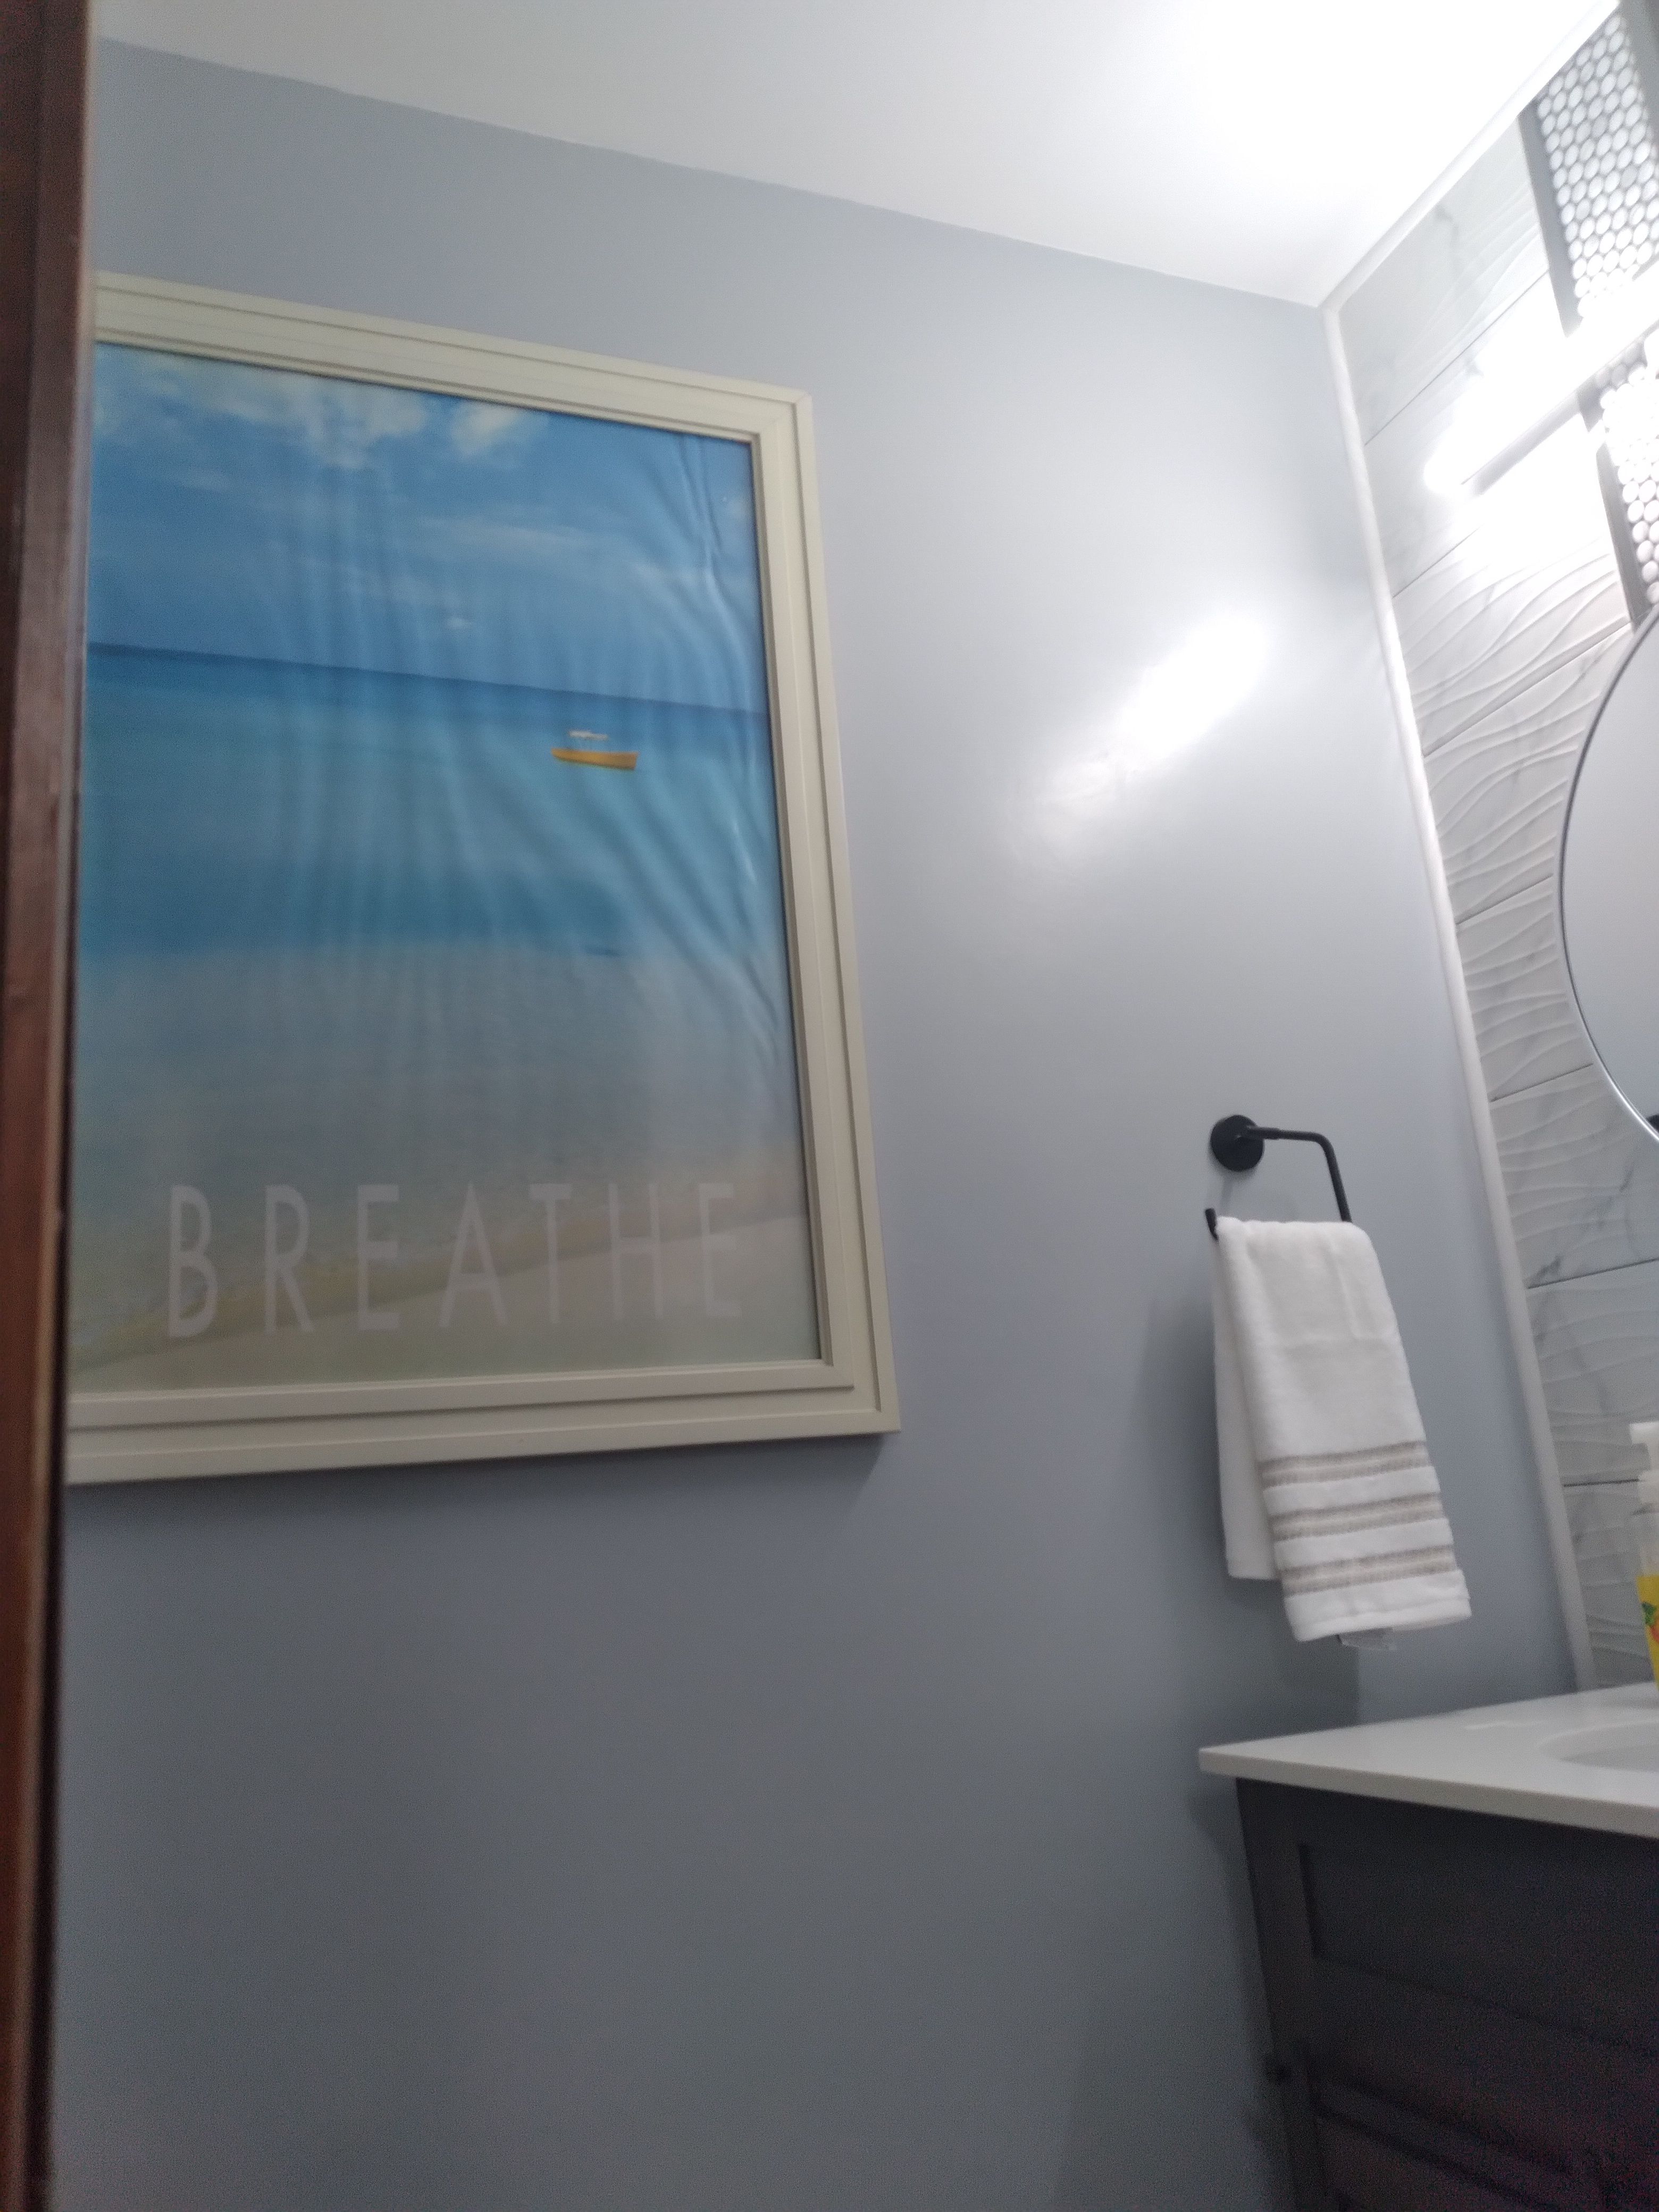 Bathroom restoration for Velez Design Consulting & Remodeling LLC in Brandon, FL